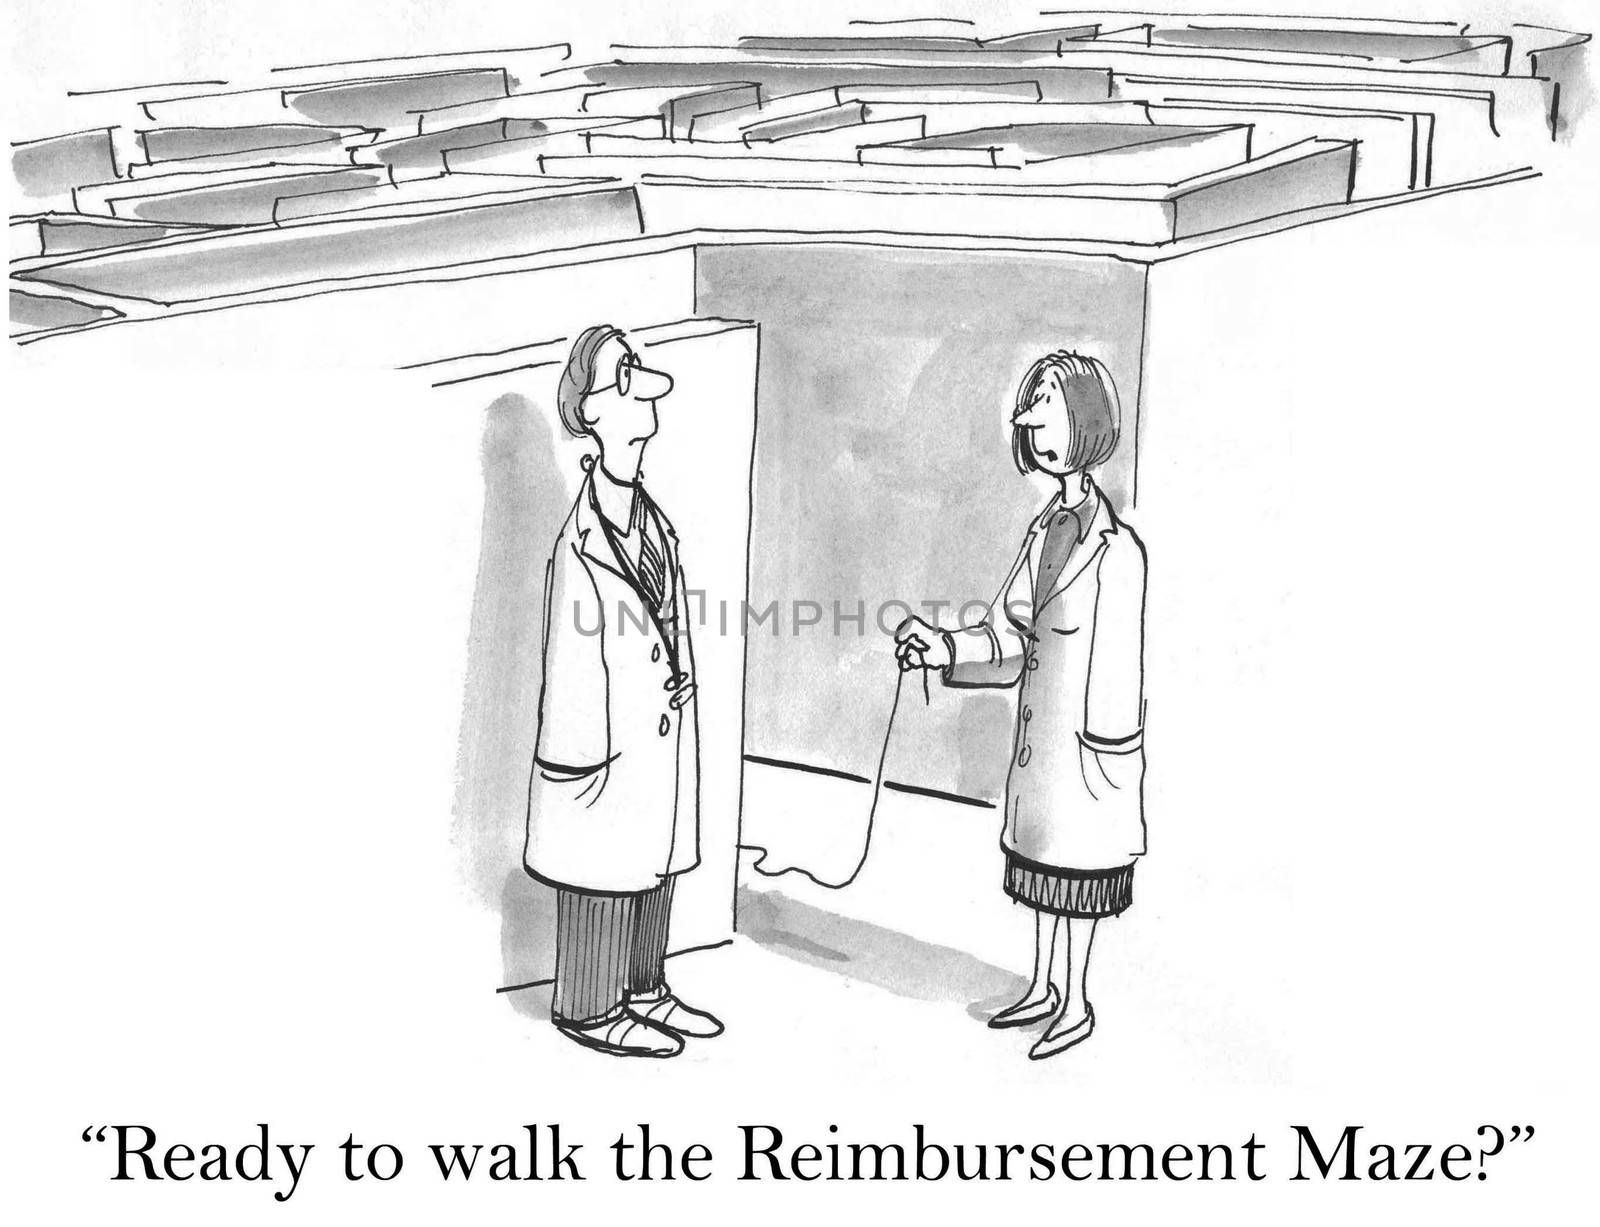 Doctors are ready to walk the reimbursement maze by andrewgenn